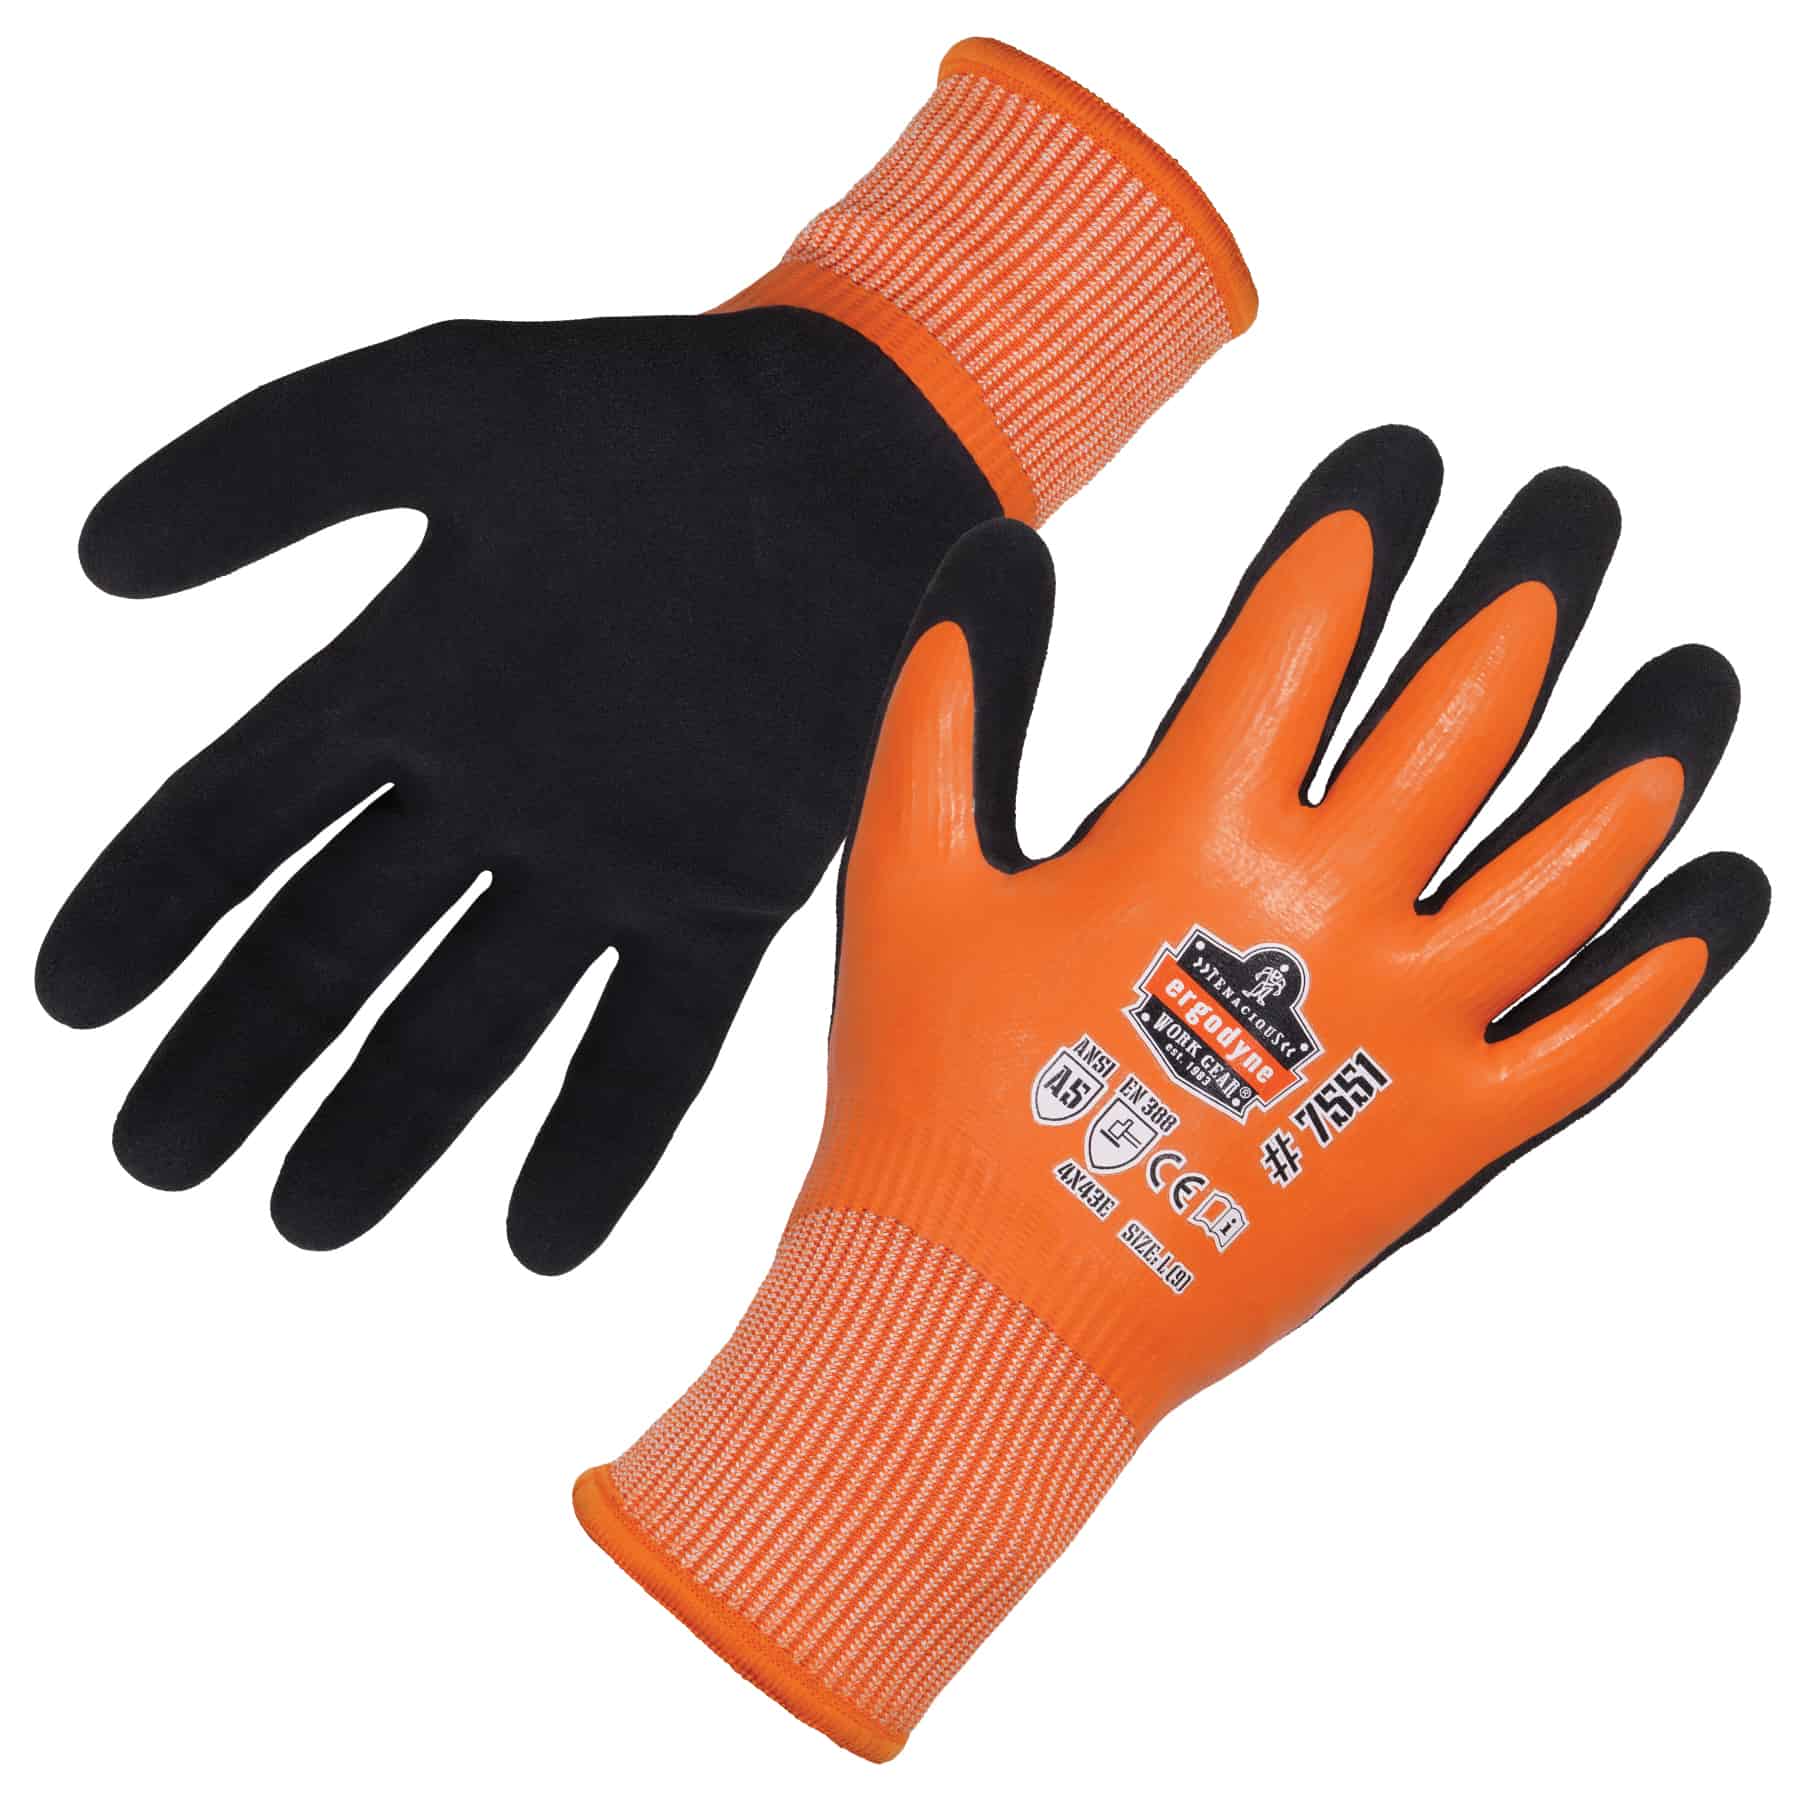 https://www.ergodyne.com/sites/default/files/product-images/17672-7551-coated-waterproof-winter-work-gloves-pair_1.jpg